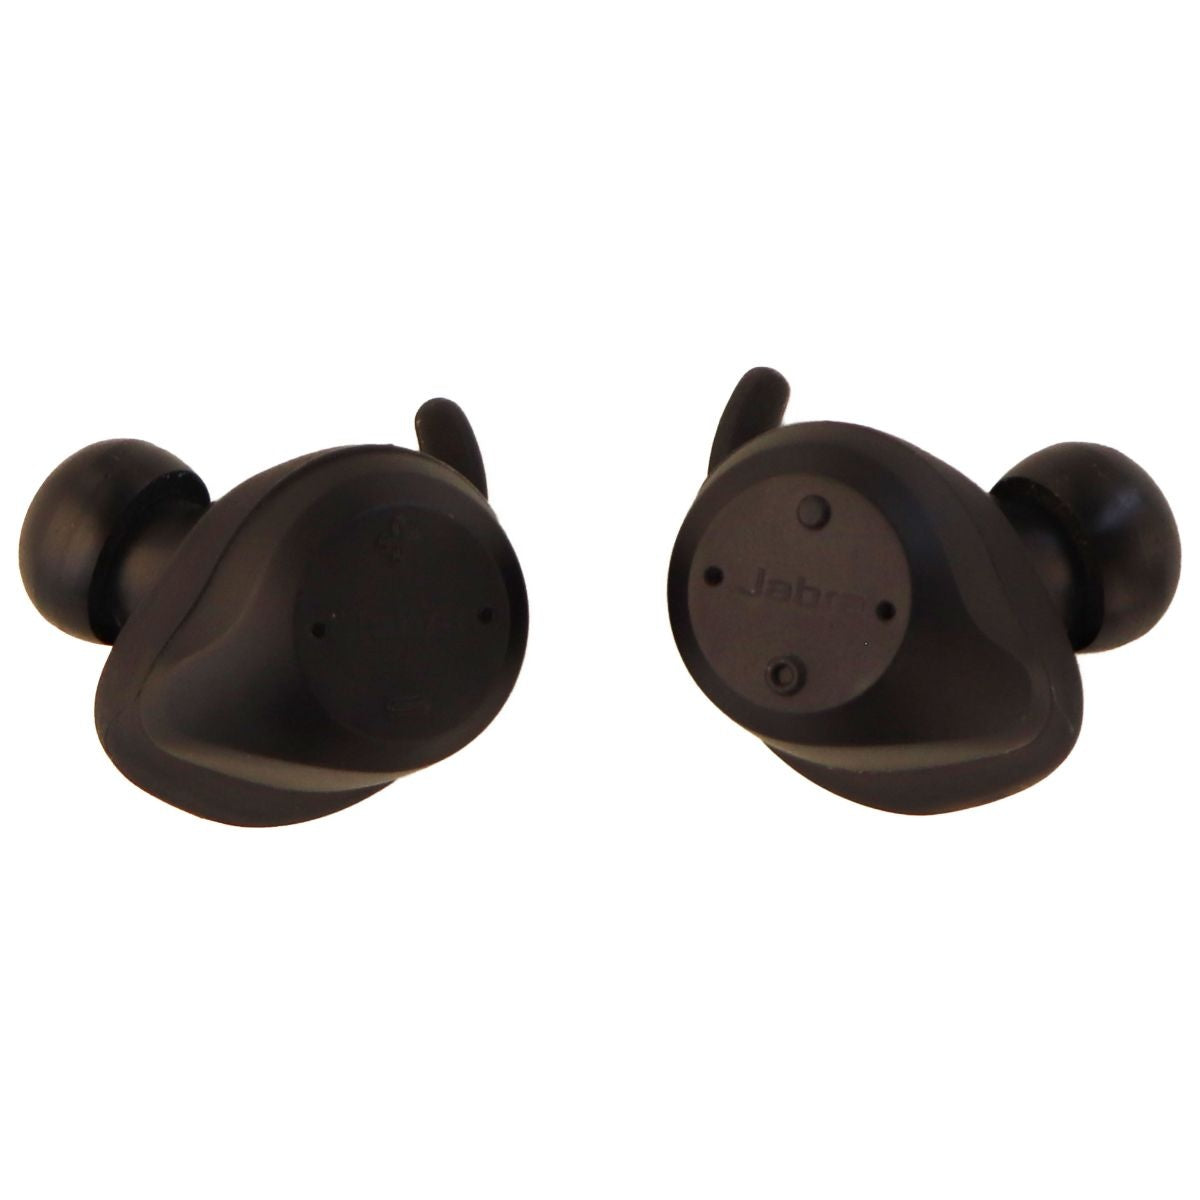 Jabra Elite Sport Wireless Earbuds and Charging Case w/ Activity Tracker - Black Portable Audio - Headphones Jabra    - Simple Cell Bulk Wholesale Pricing - USA Seller